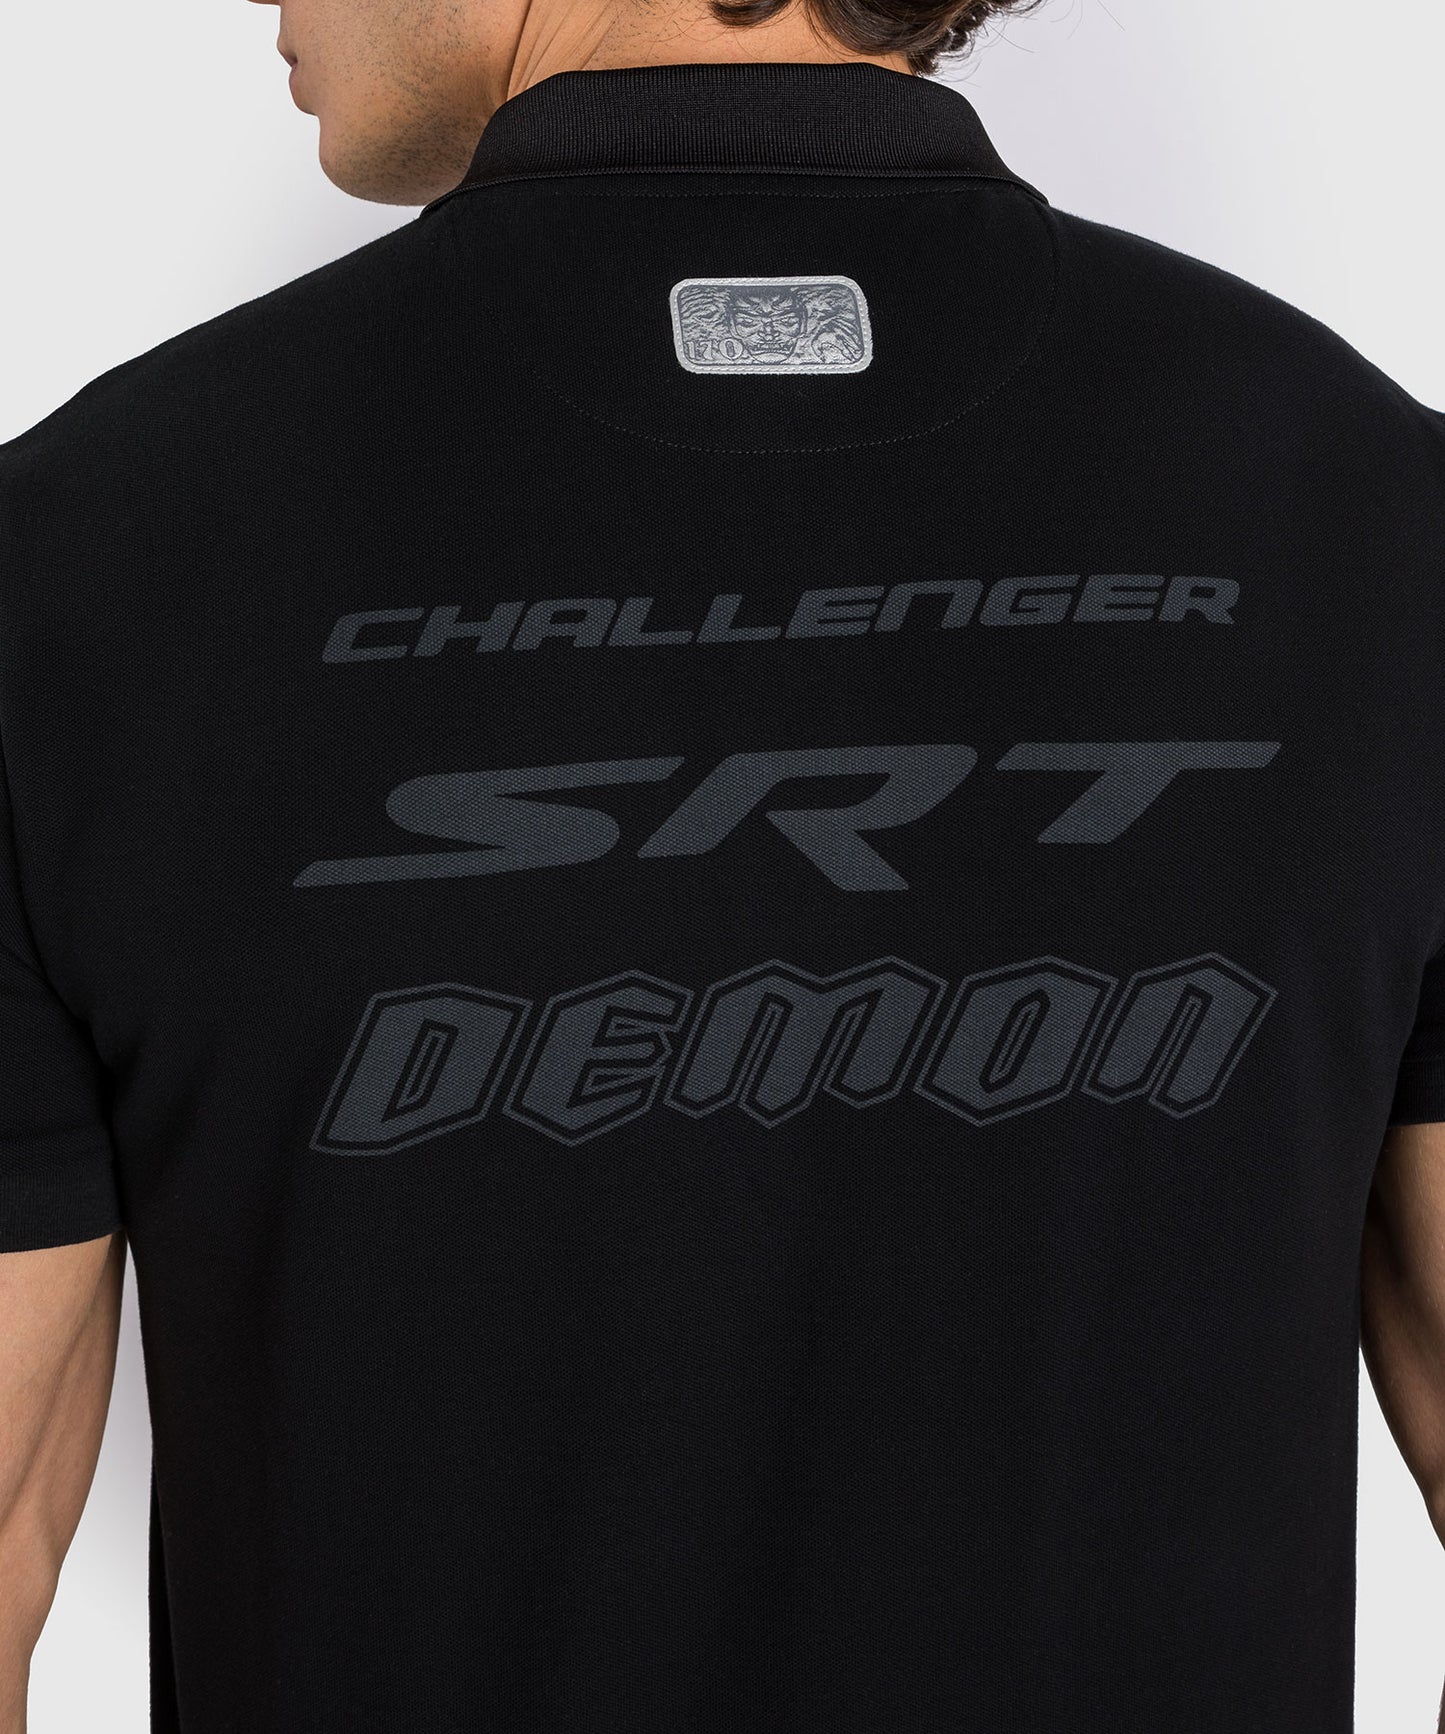 Venum x Dodge Demon 170  Men’s Polo Shirt - Black